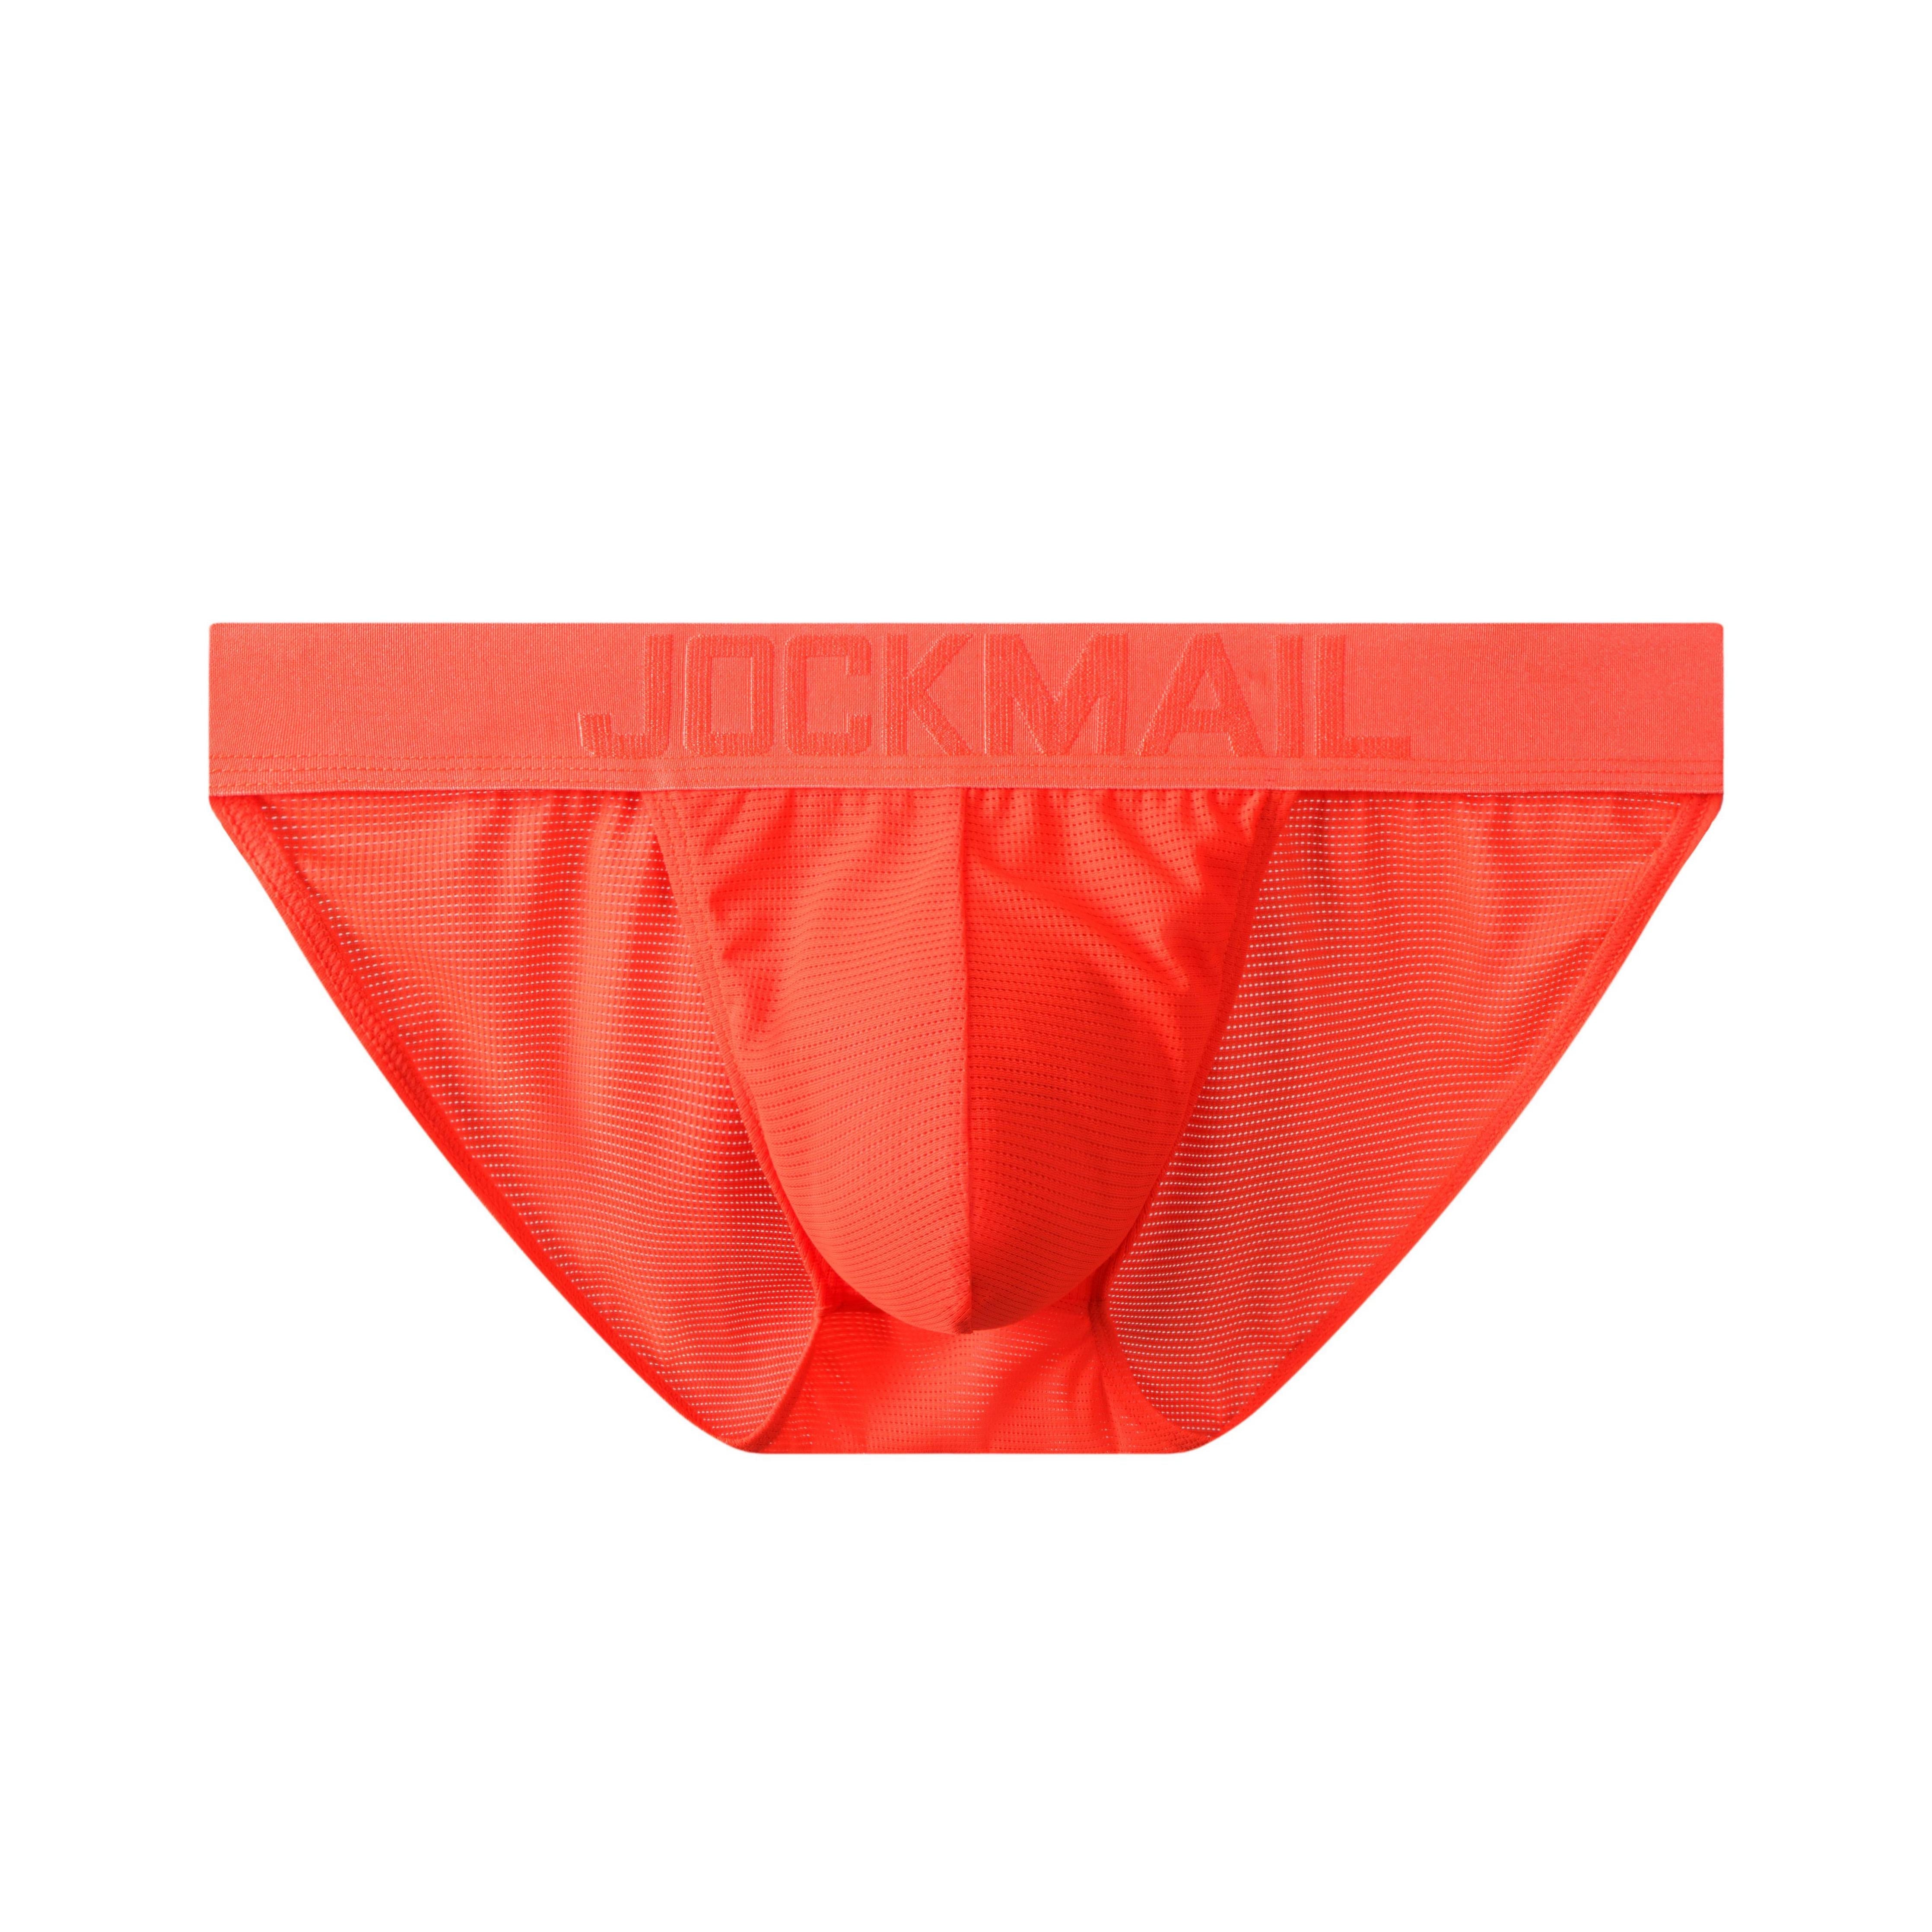 JOCKMAIL Men Mesh Underwear Boxers Trunks Shorts Breathable Crotch Mens  Underwear Boxers (M, Black) at  Men's Clothing store